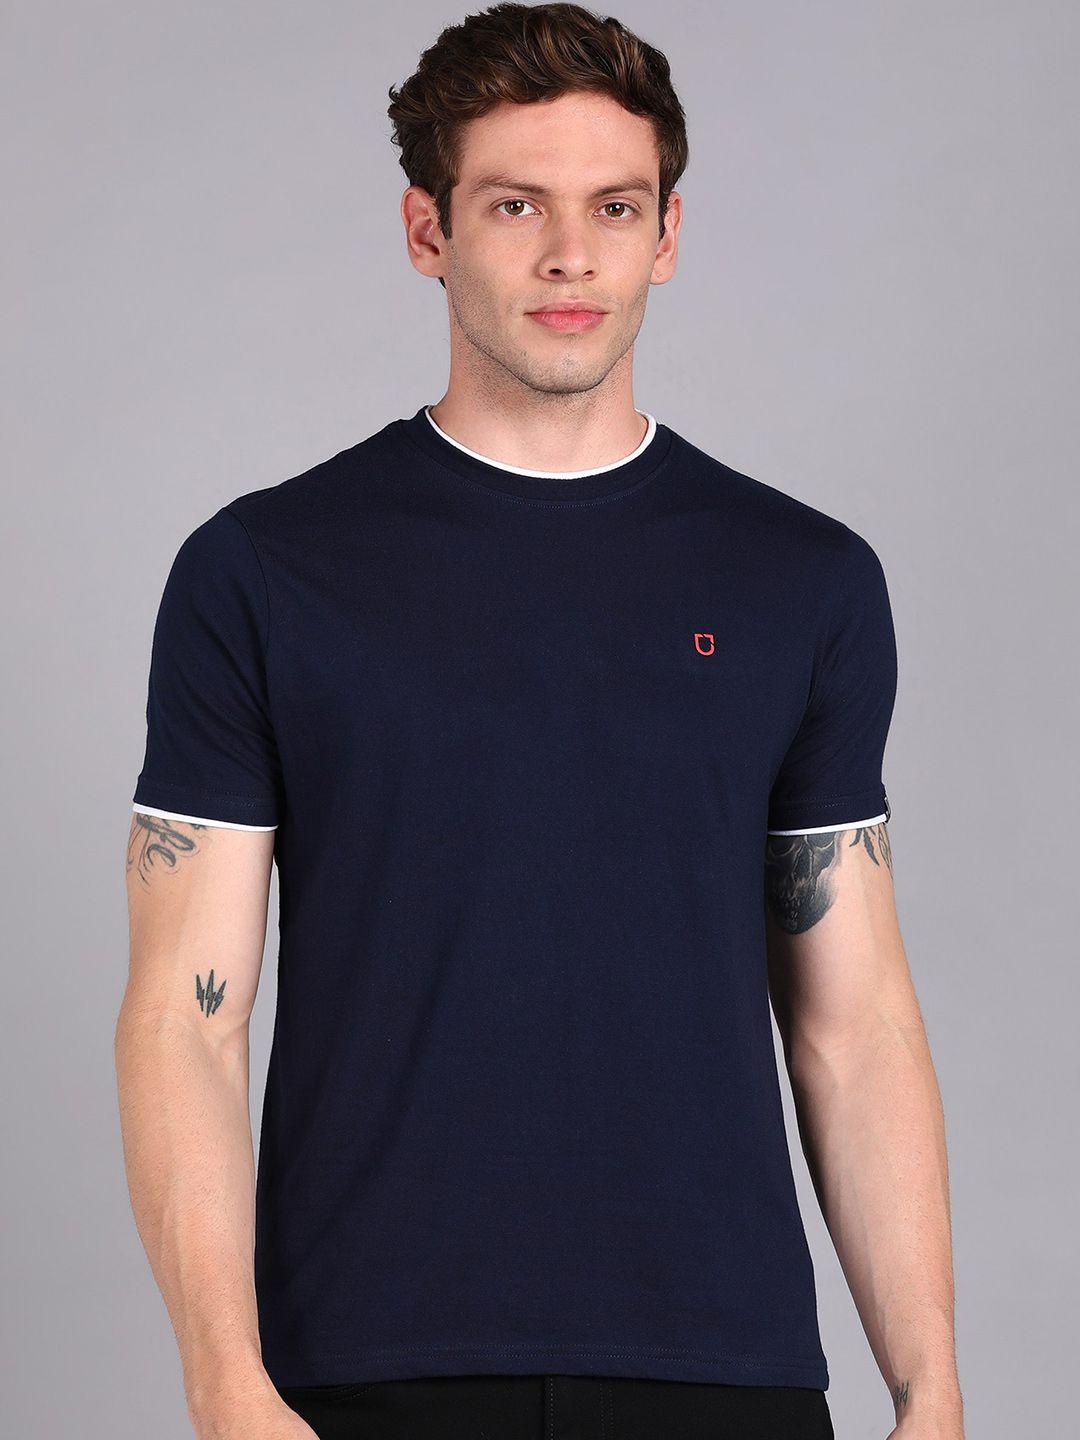 urbano fashion round neck slim fit bio finish pure cotton t-shirt